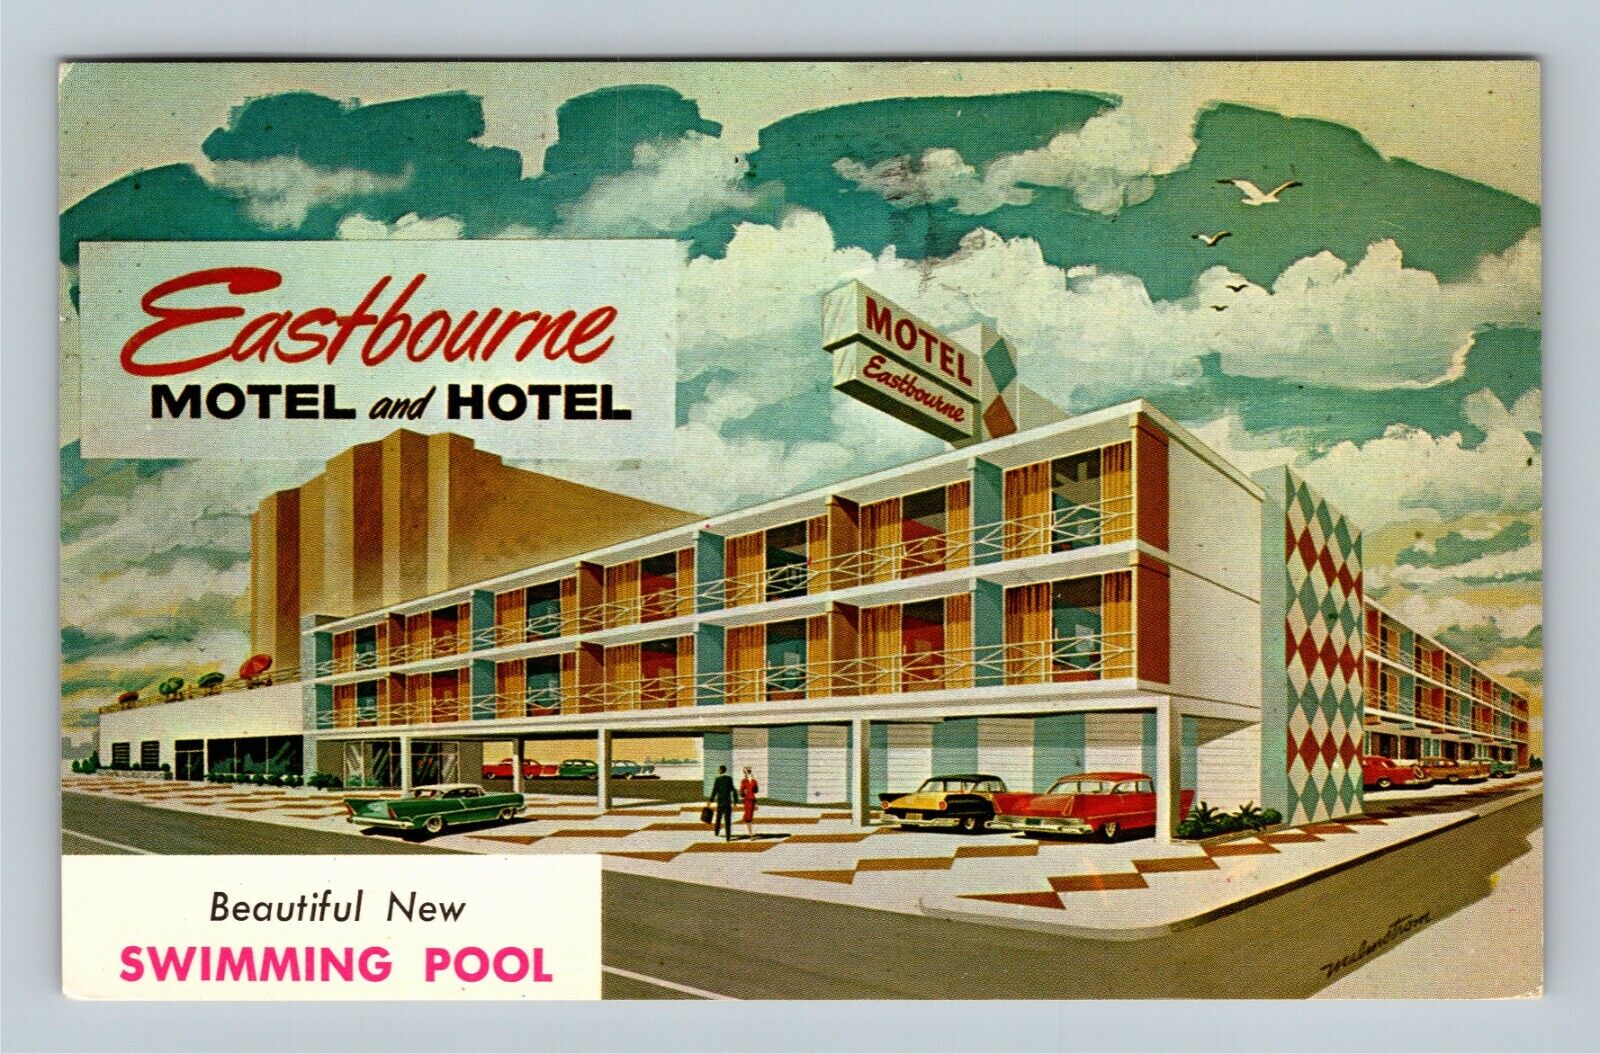 Atlantic City NJ, Eastbourne Motel & Hotel, New Jersey c1966 Vintage Postcard